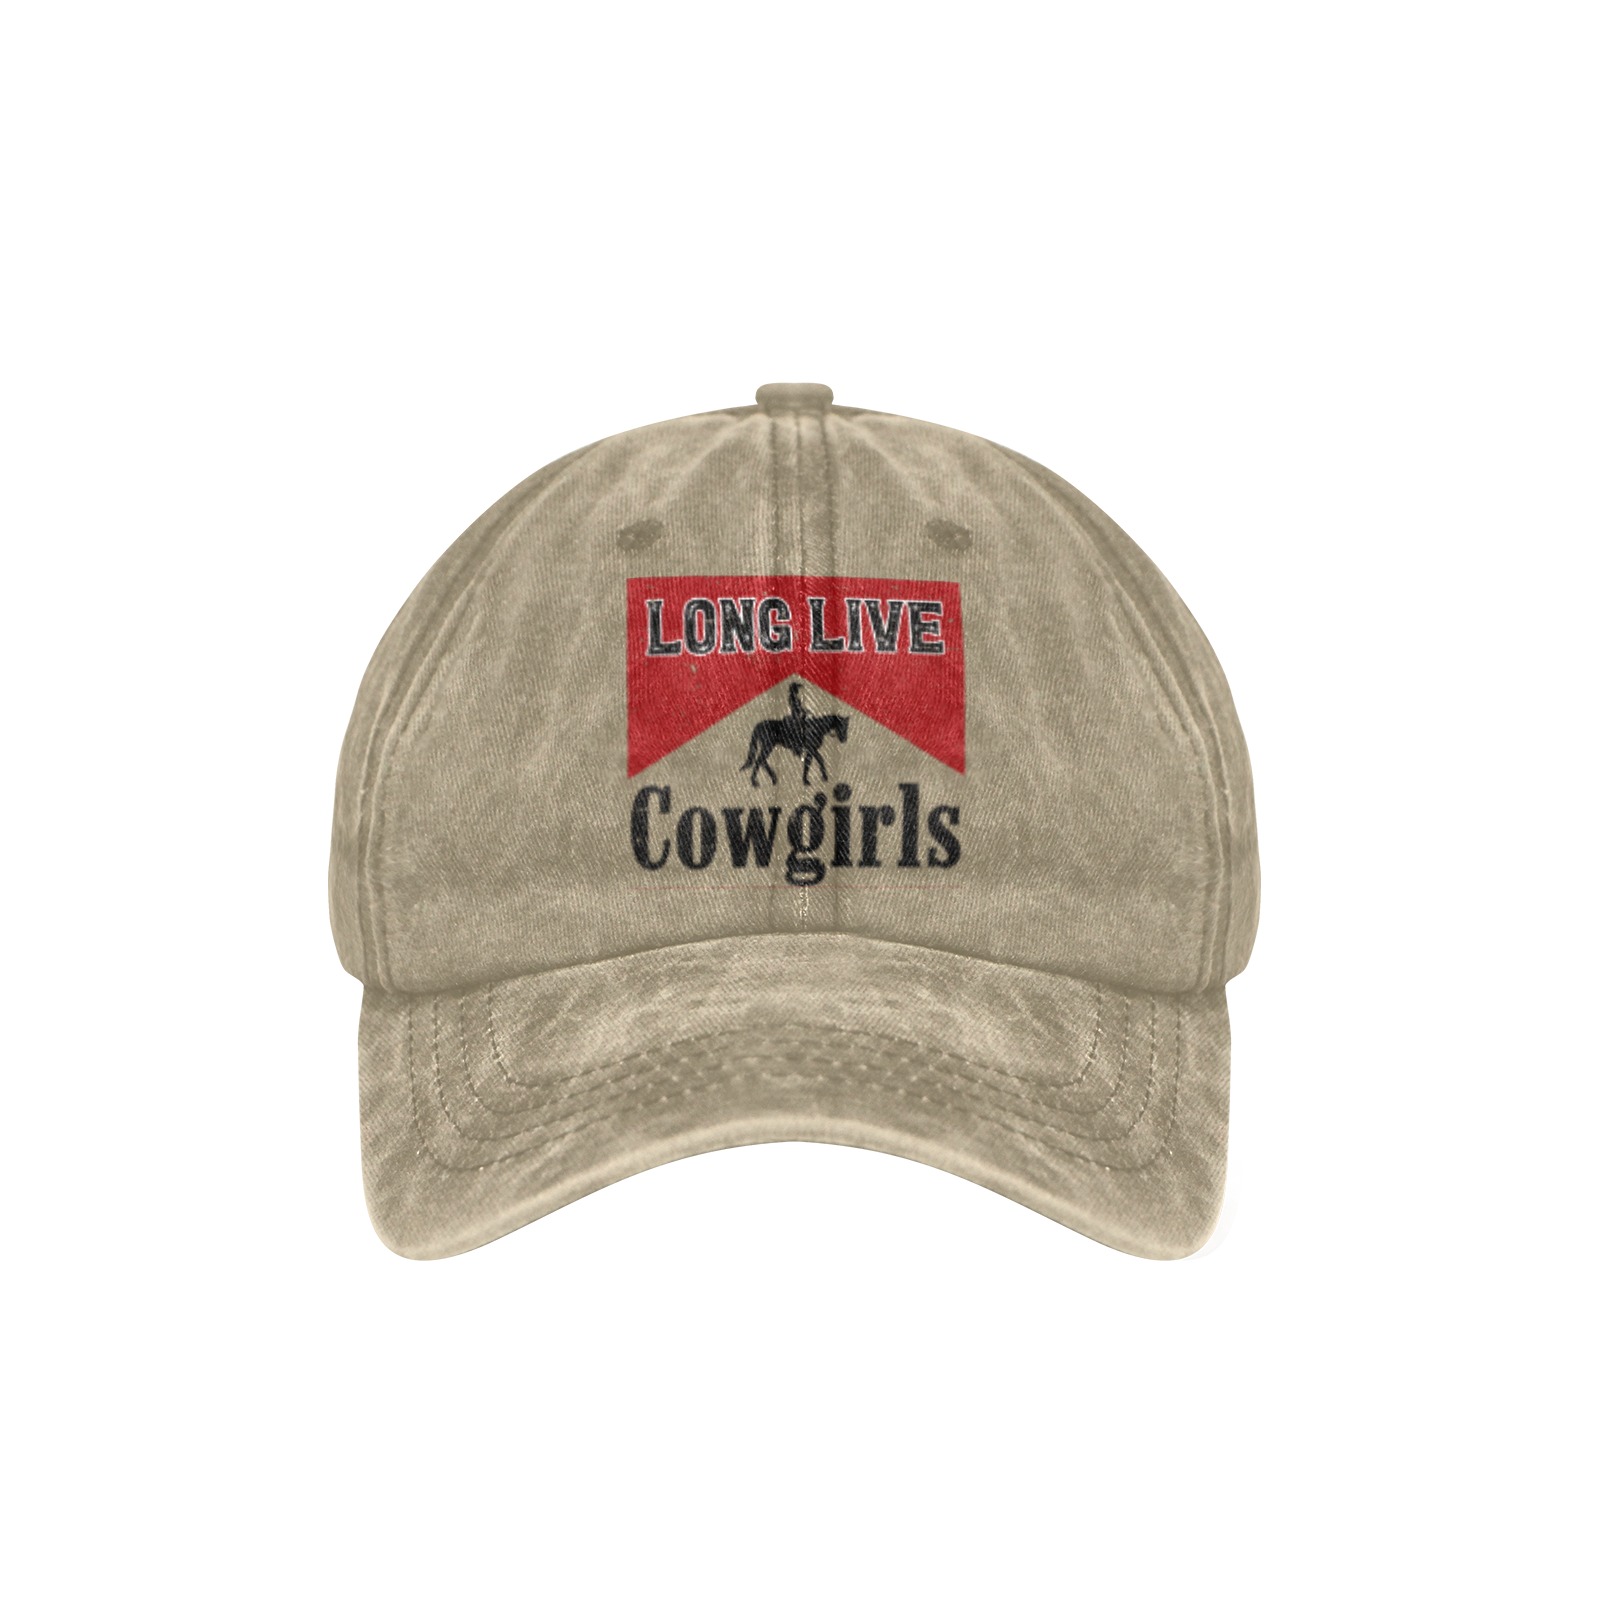 Long Live Cowgirls (T) Denim Cap